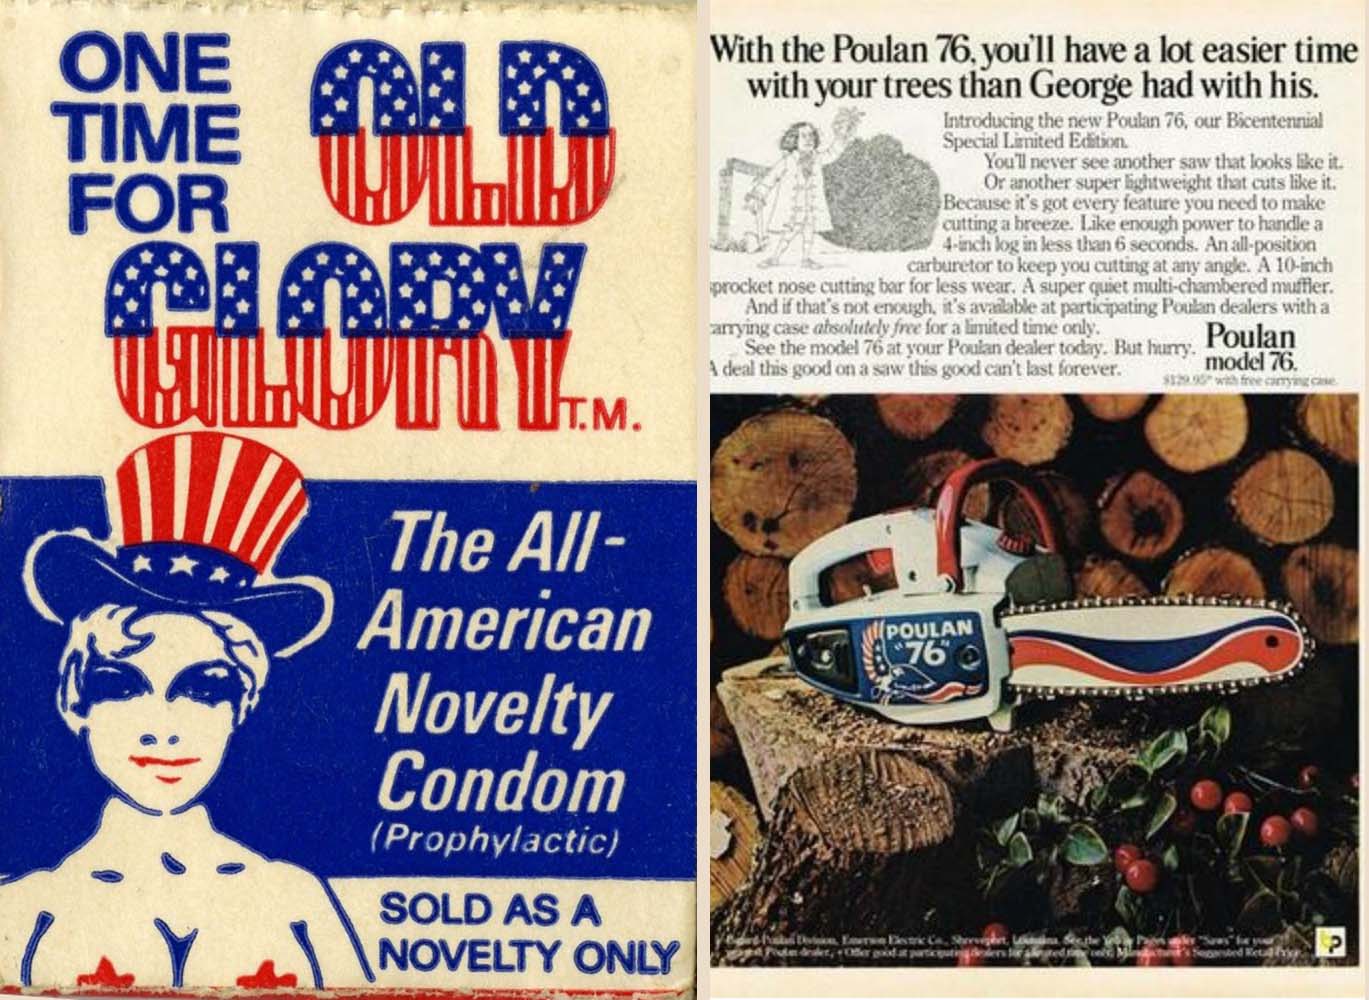 bicentennial condom and chainsaw